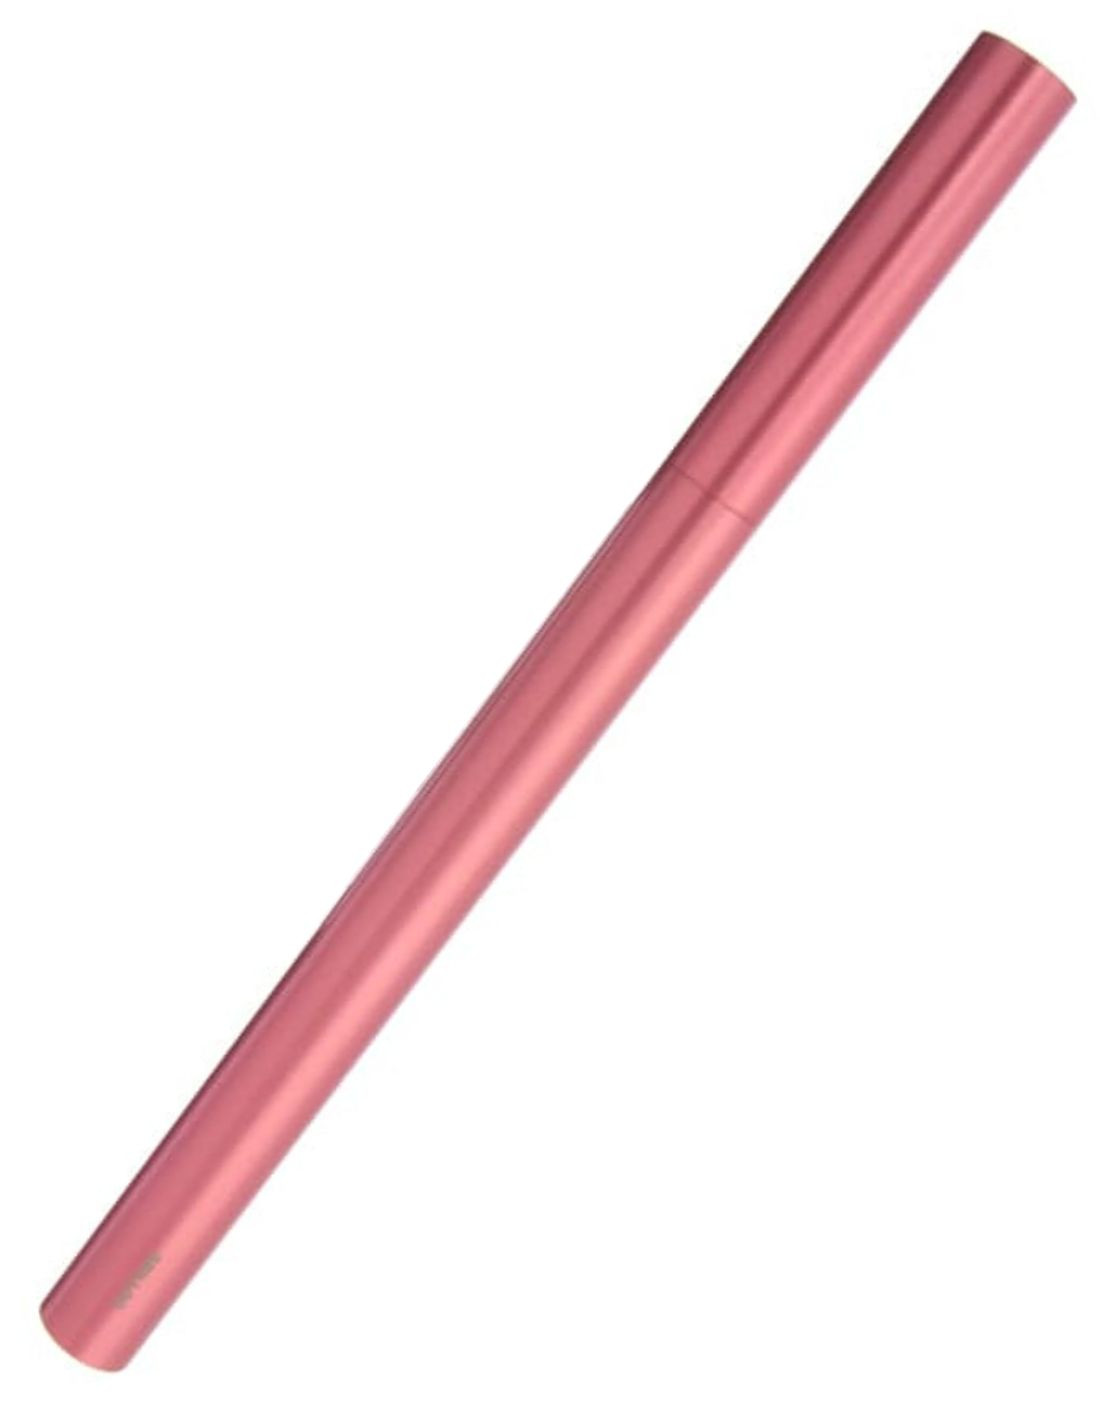 Drillog classical material AL (Long) Nib Holder - Rose Quartz Pink